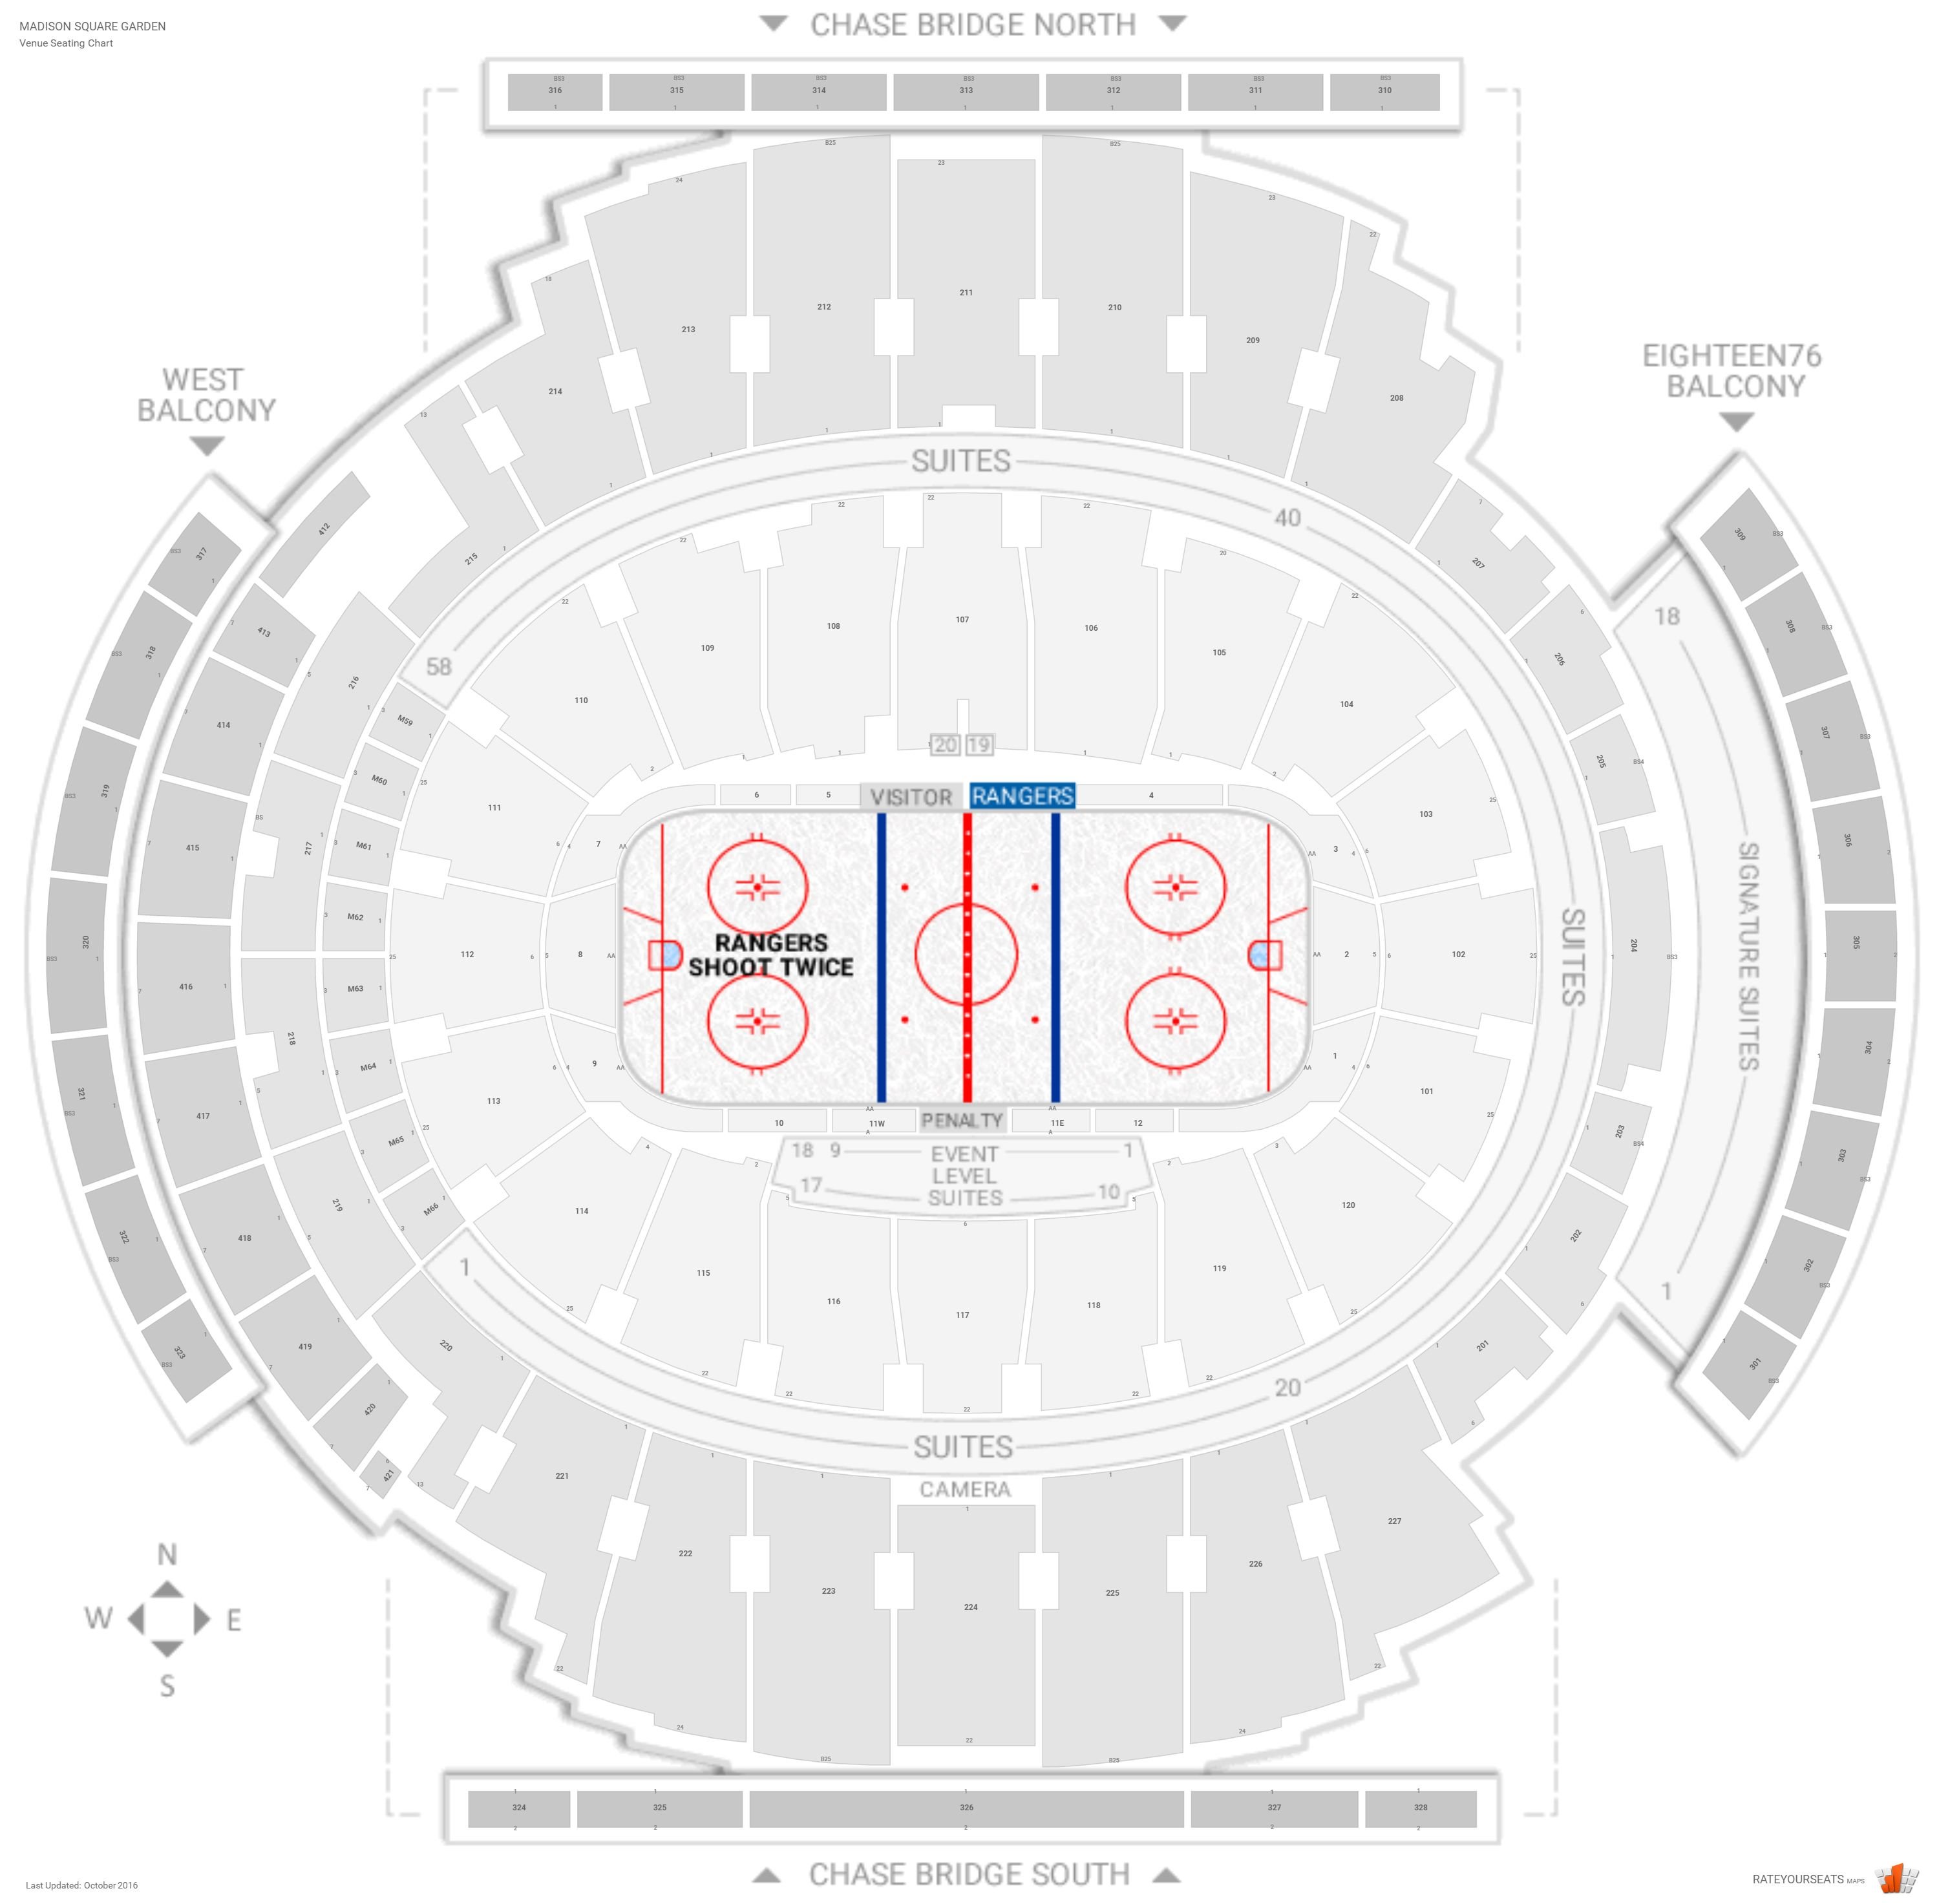 New York Rangers Seating Guide Madison Square Garden